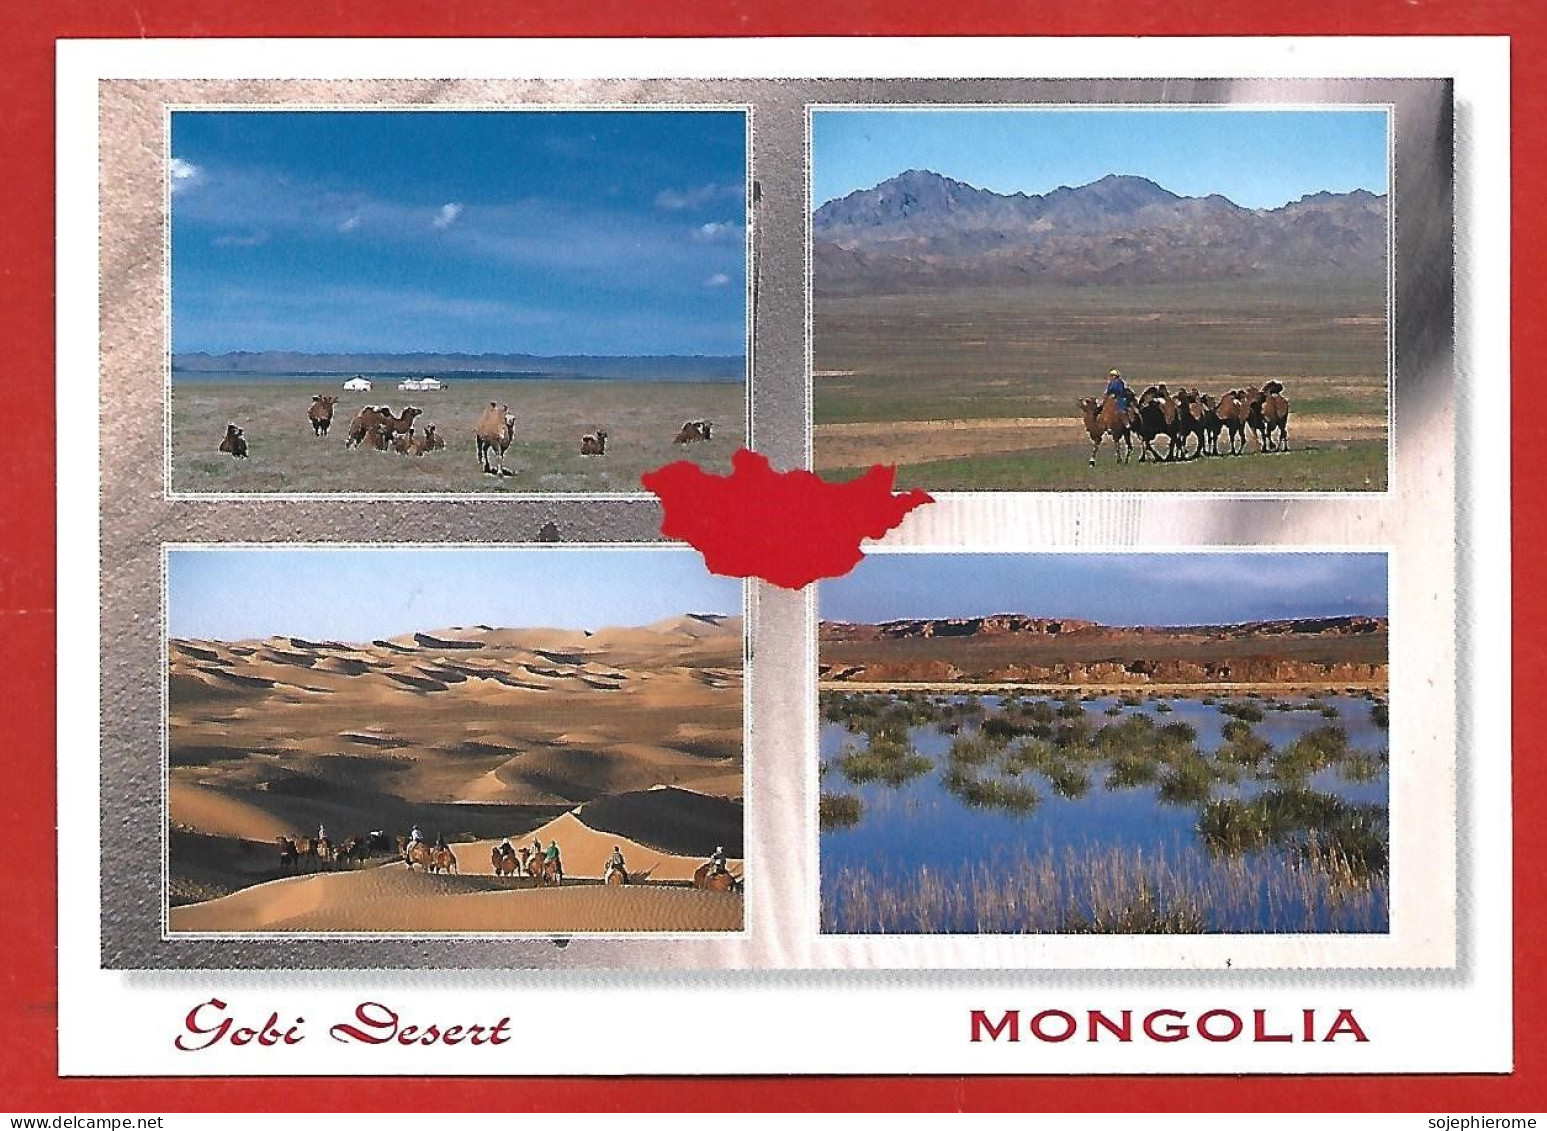 Gobi Desert (Mongolia) Chameaux Camels 2scans 2007 - Mongolei